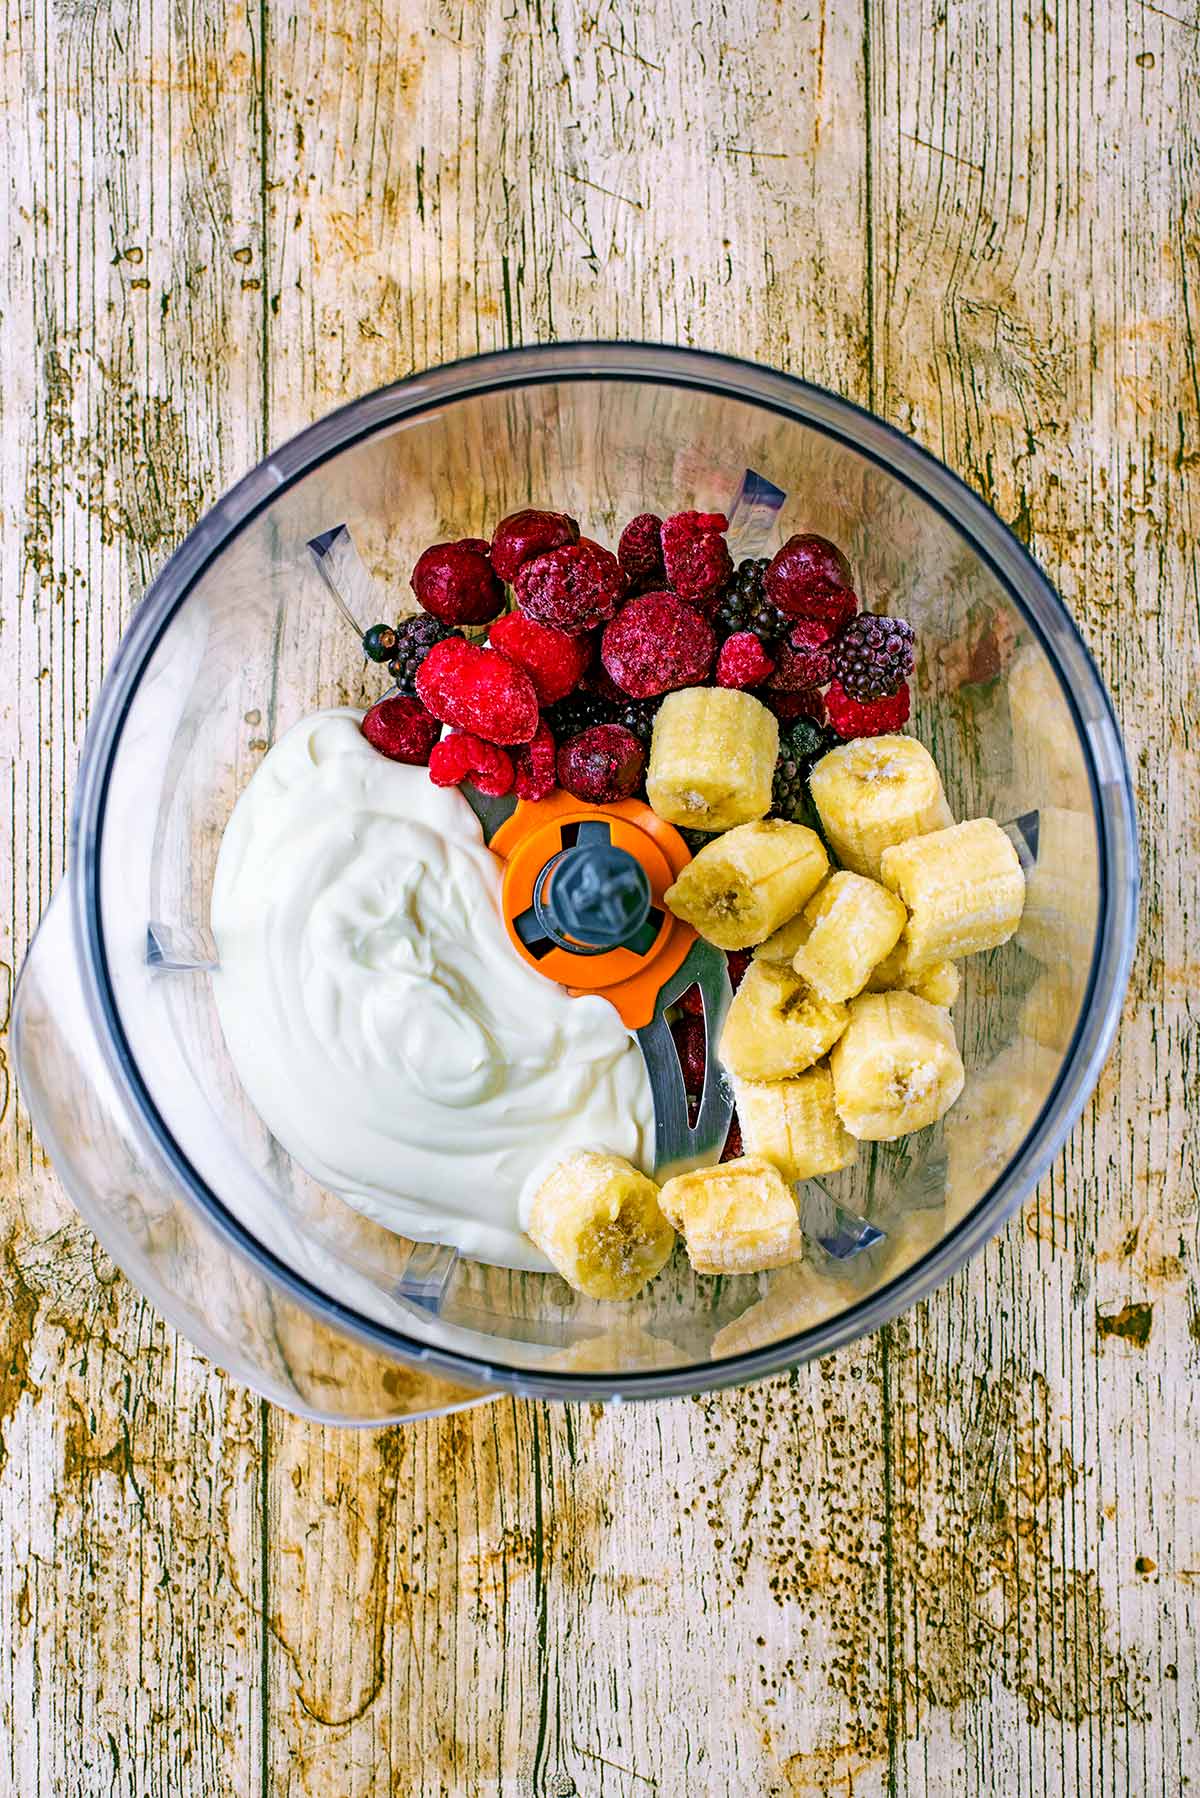 Yogurt, berries and banana chunks in a food processor.